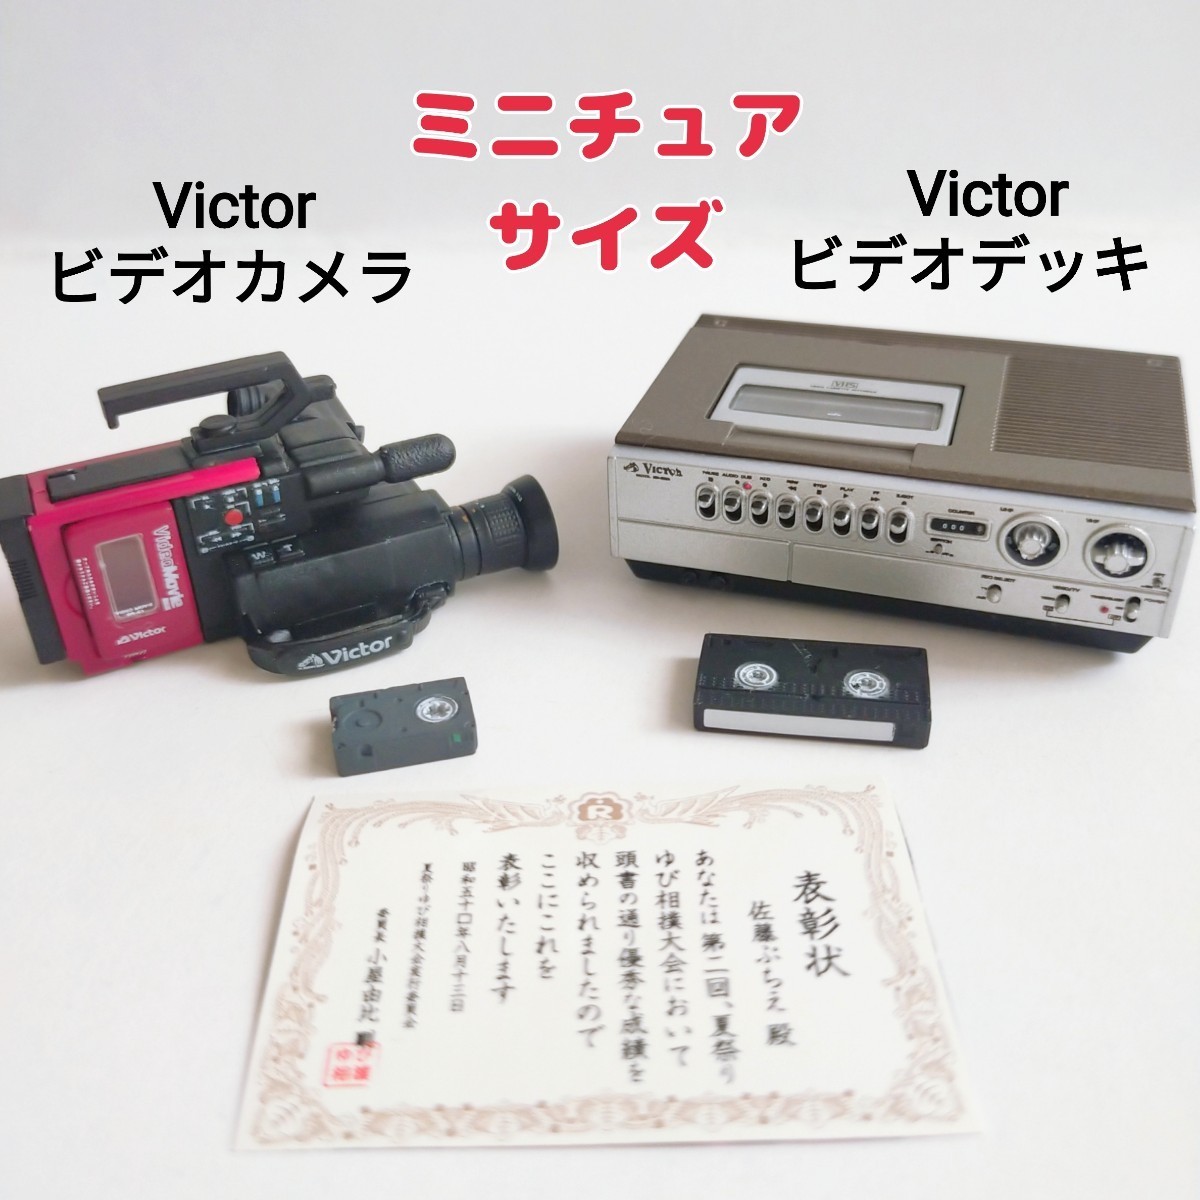  miniature Showa Retro Lee men to... wrinkle . house Victor video camera video deck doll house ticket Elephant ga tea awarding shape 